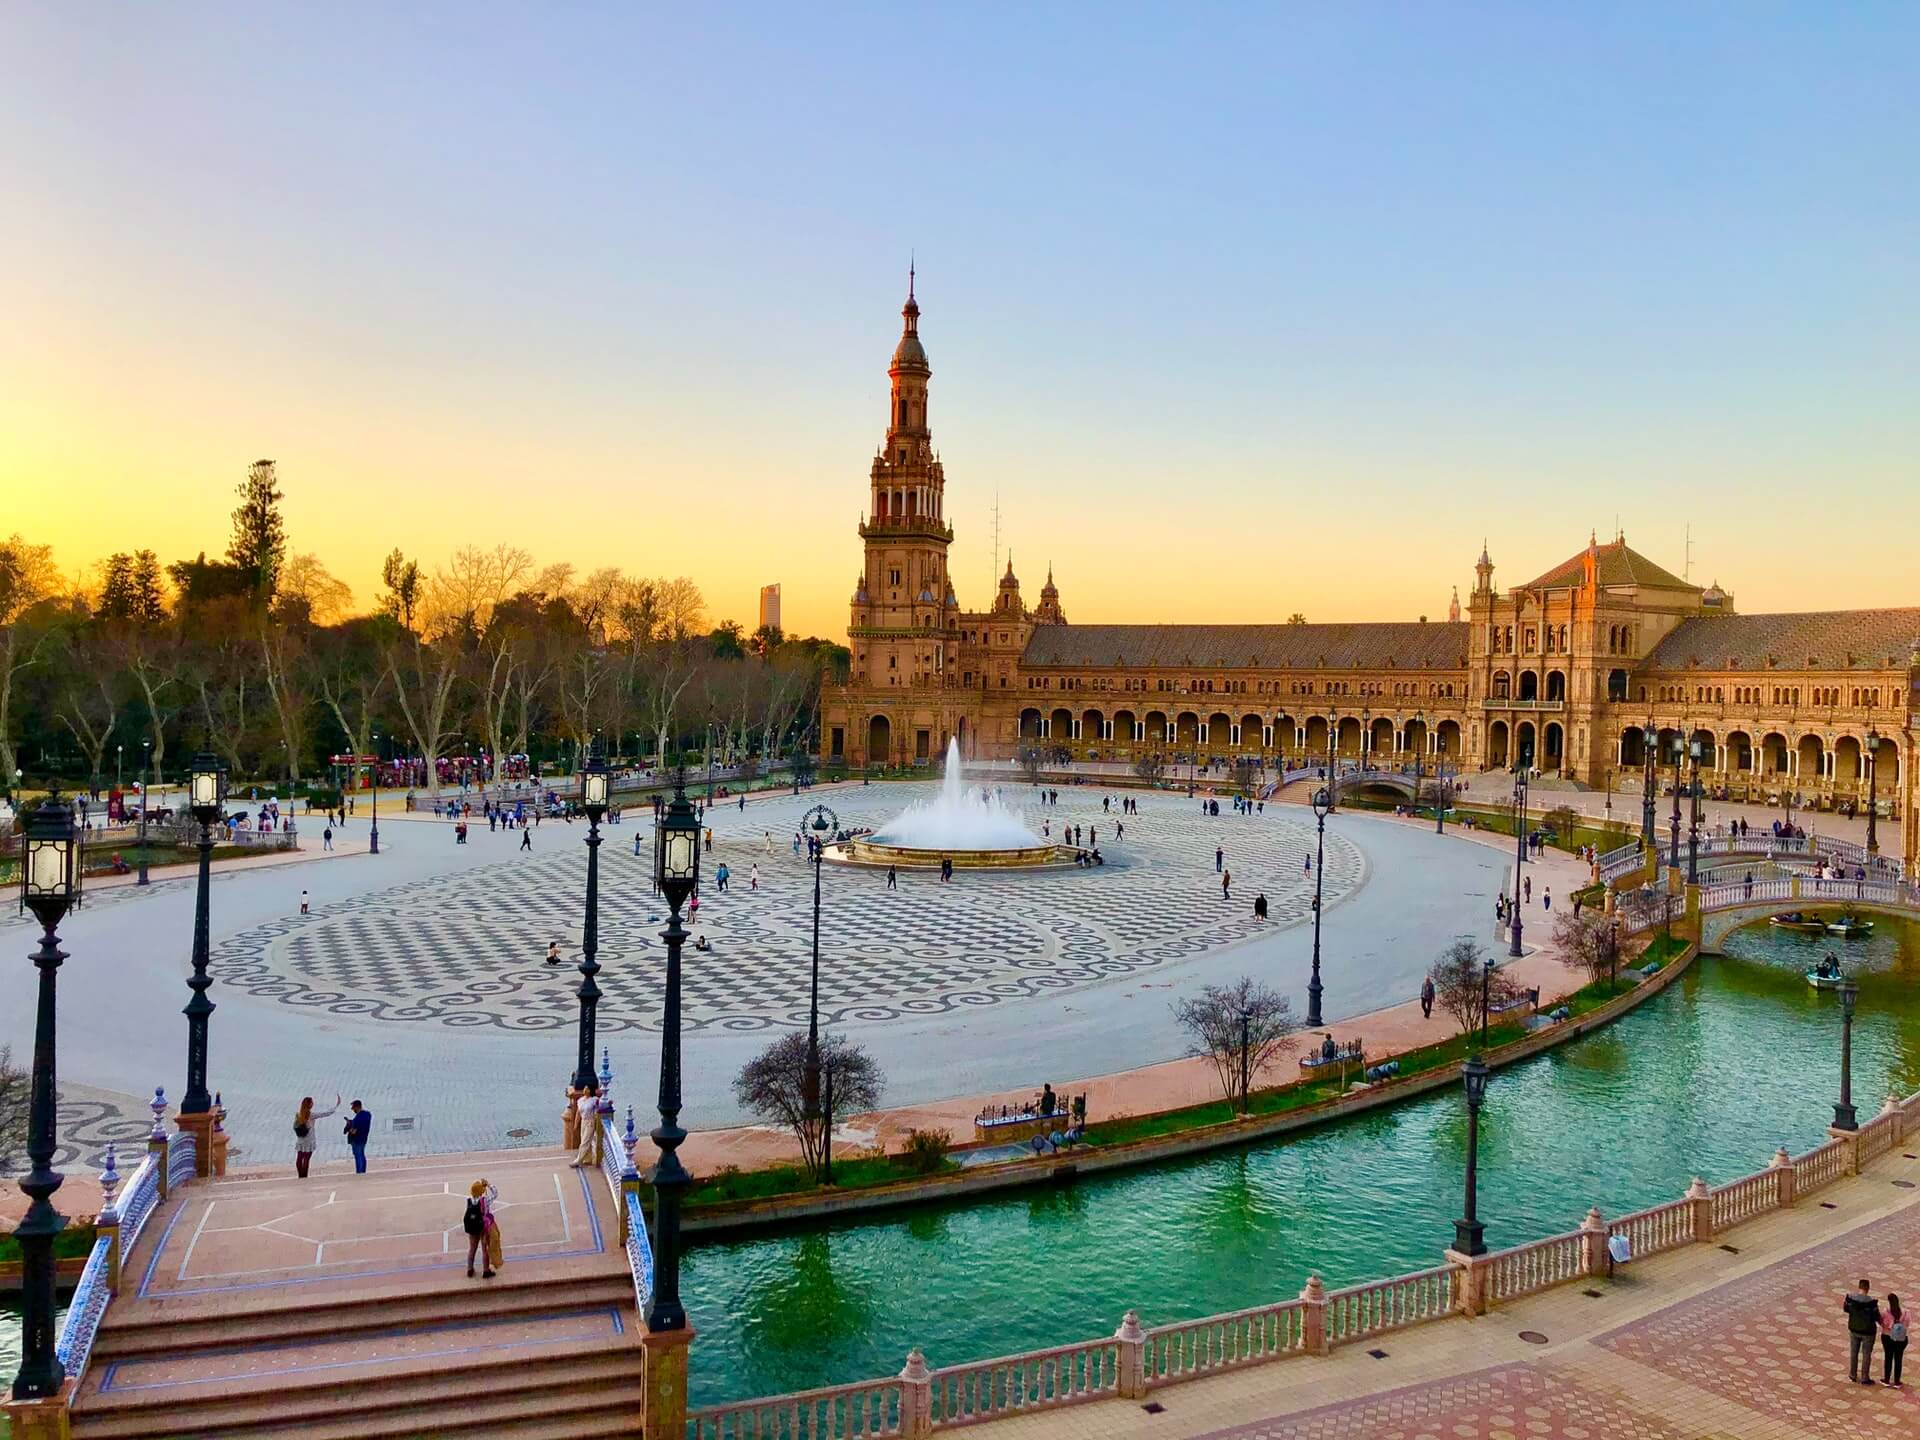 Plaza des Espana in Seville